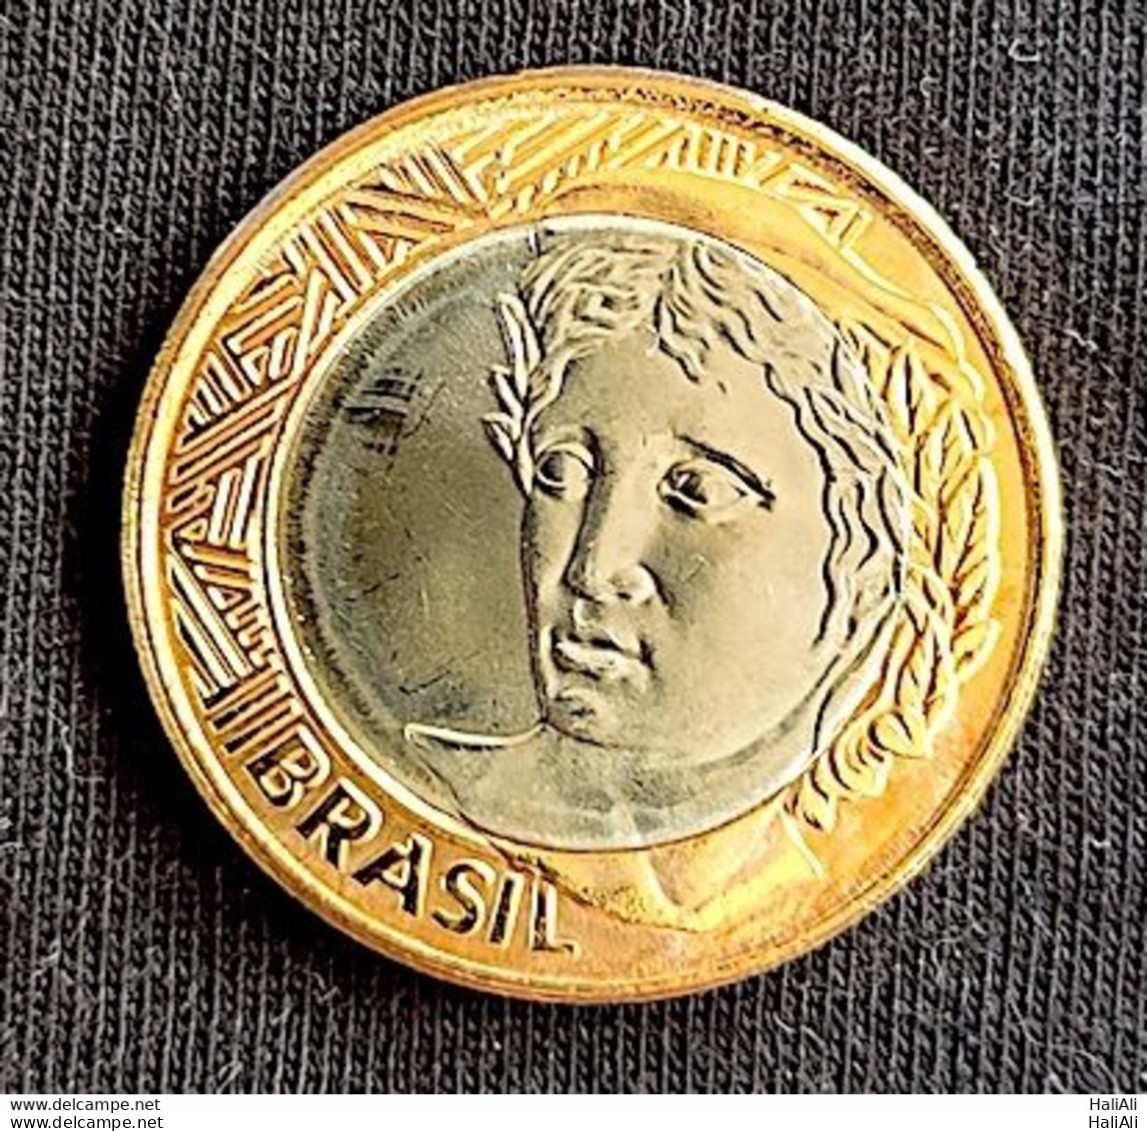 Brazil Coin 1 Real 2019 UNC - Brazil